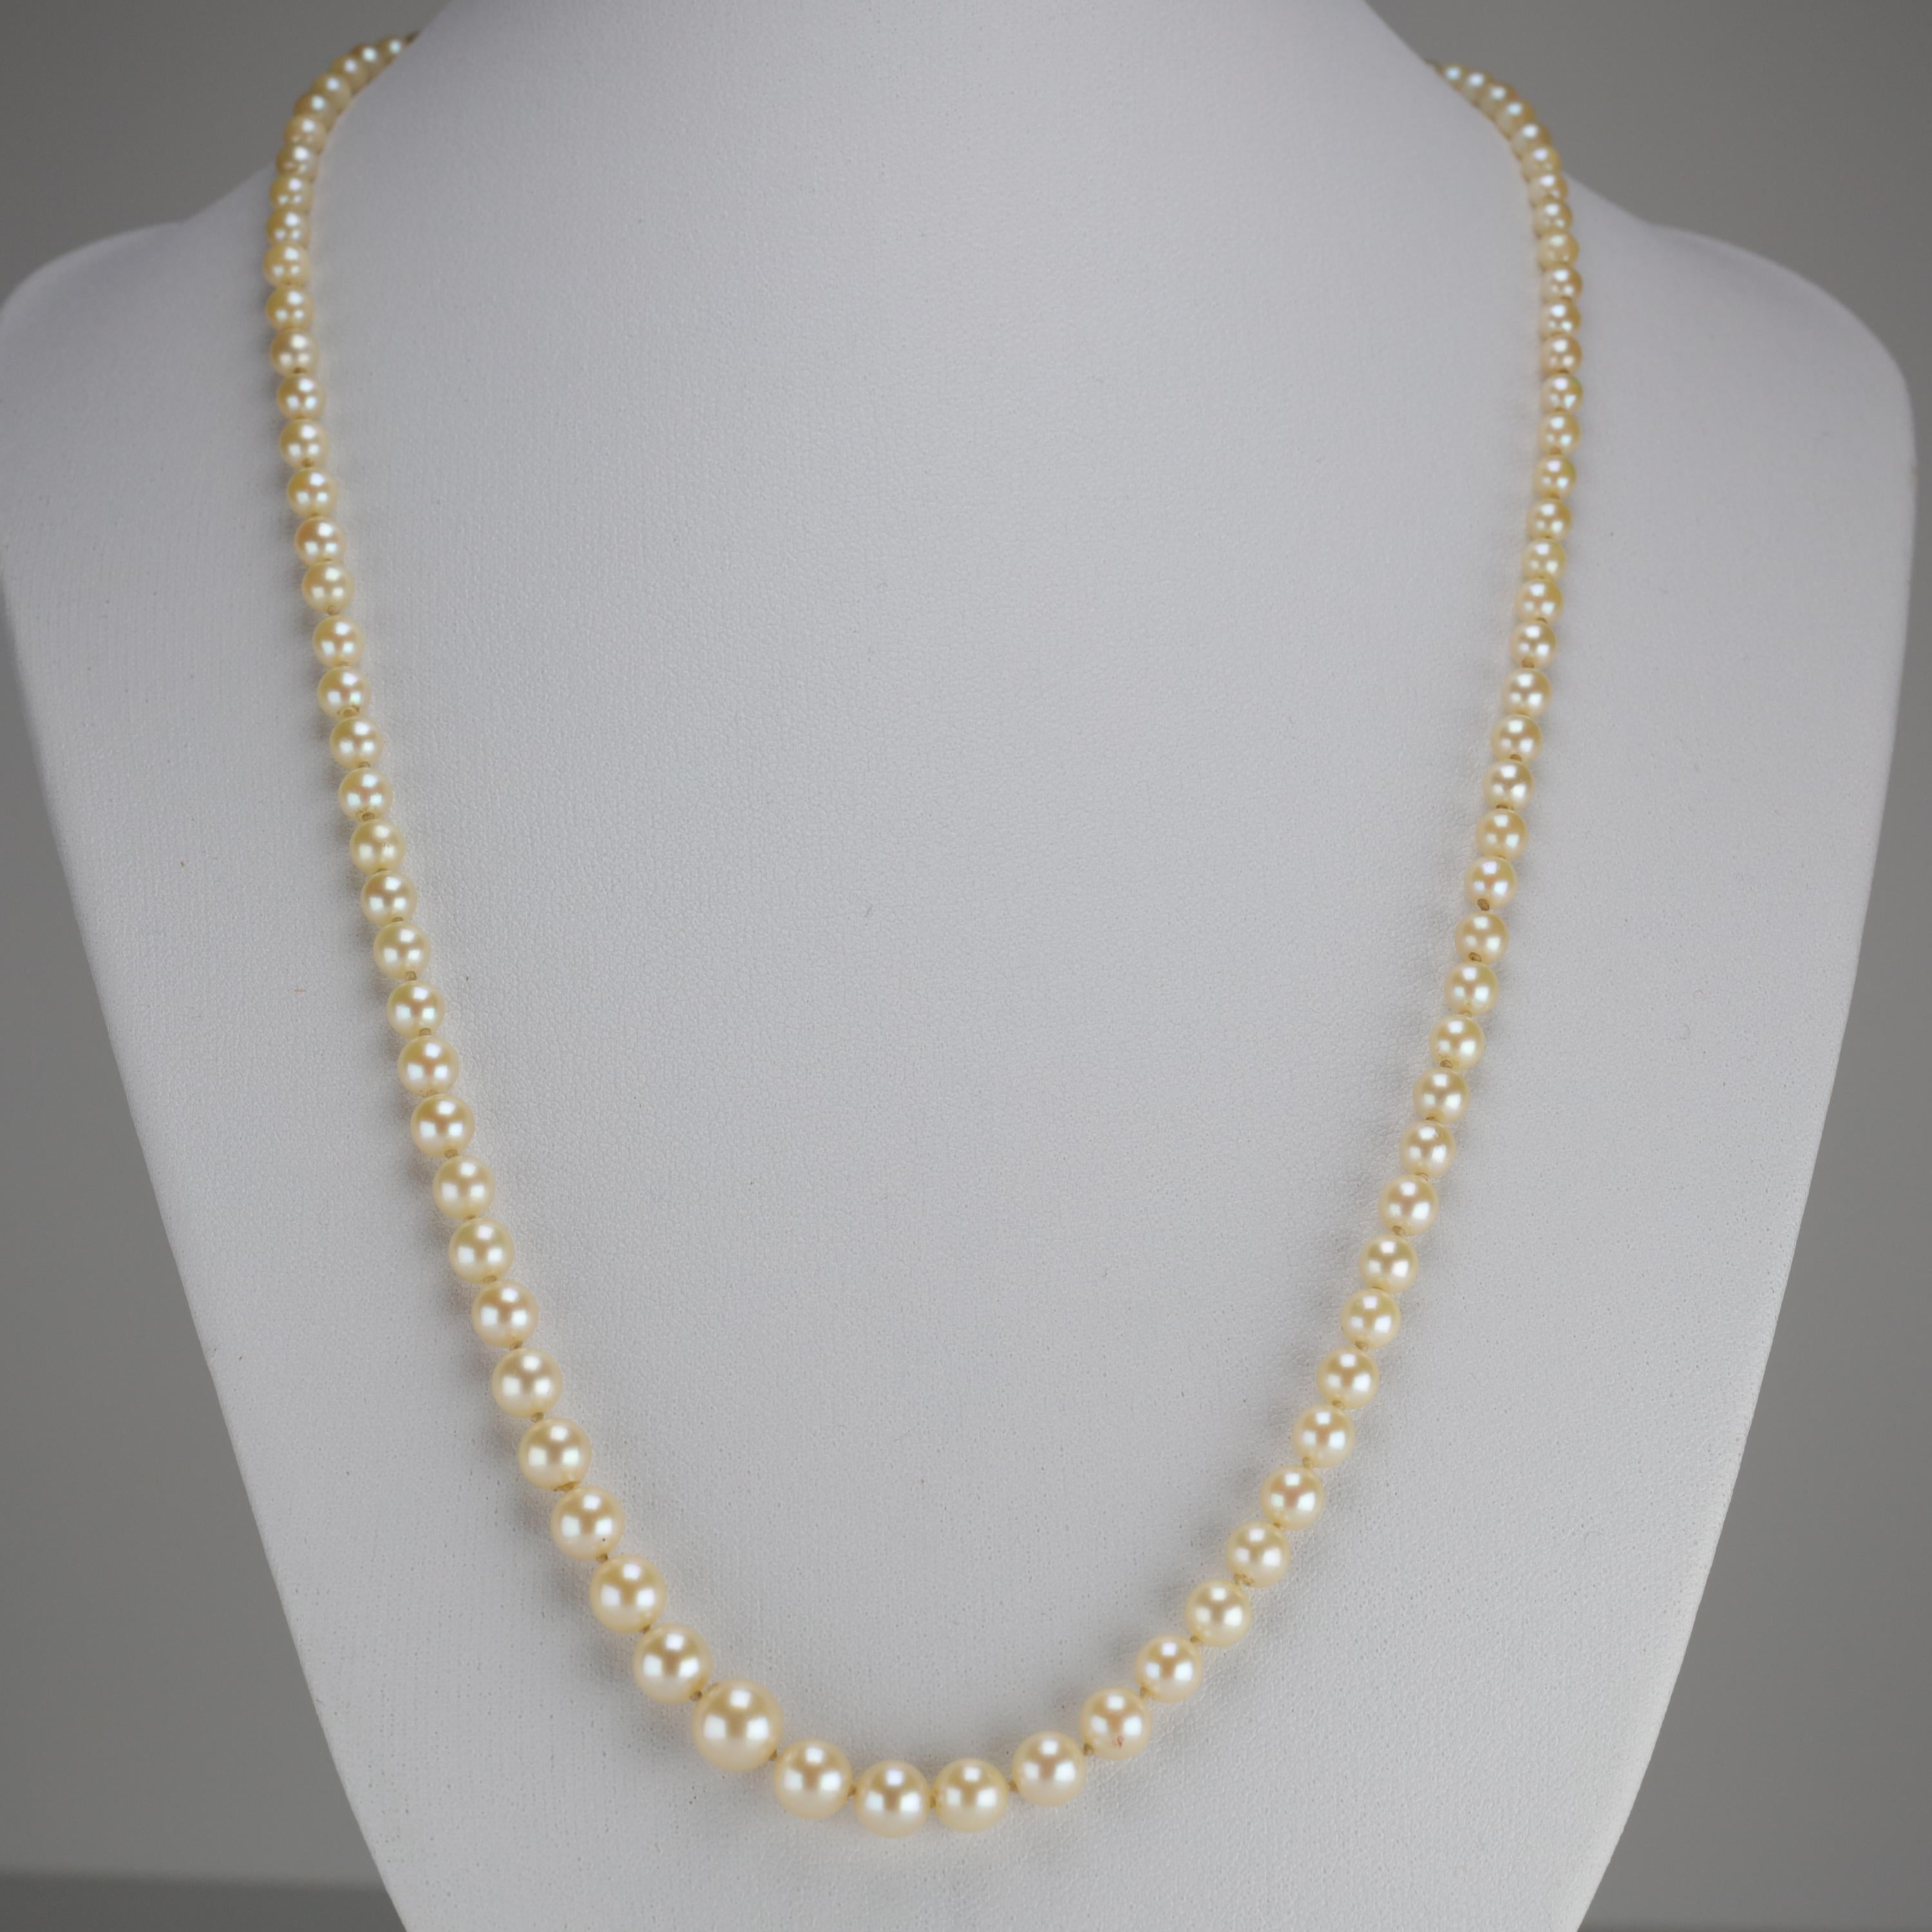 Mikimoto Original Strand of First Viable Cultured Pearls, circa 1920s 6